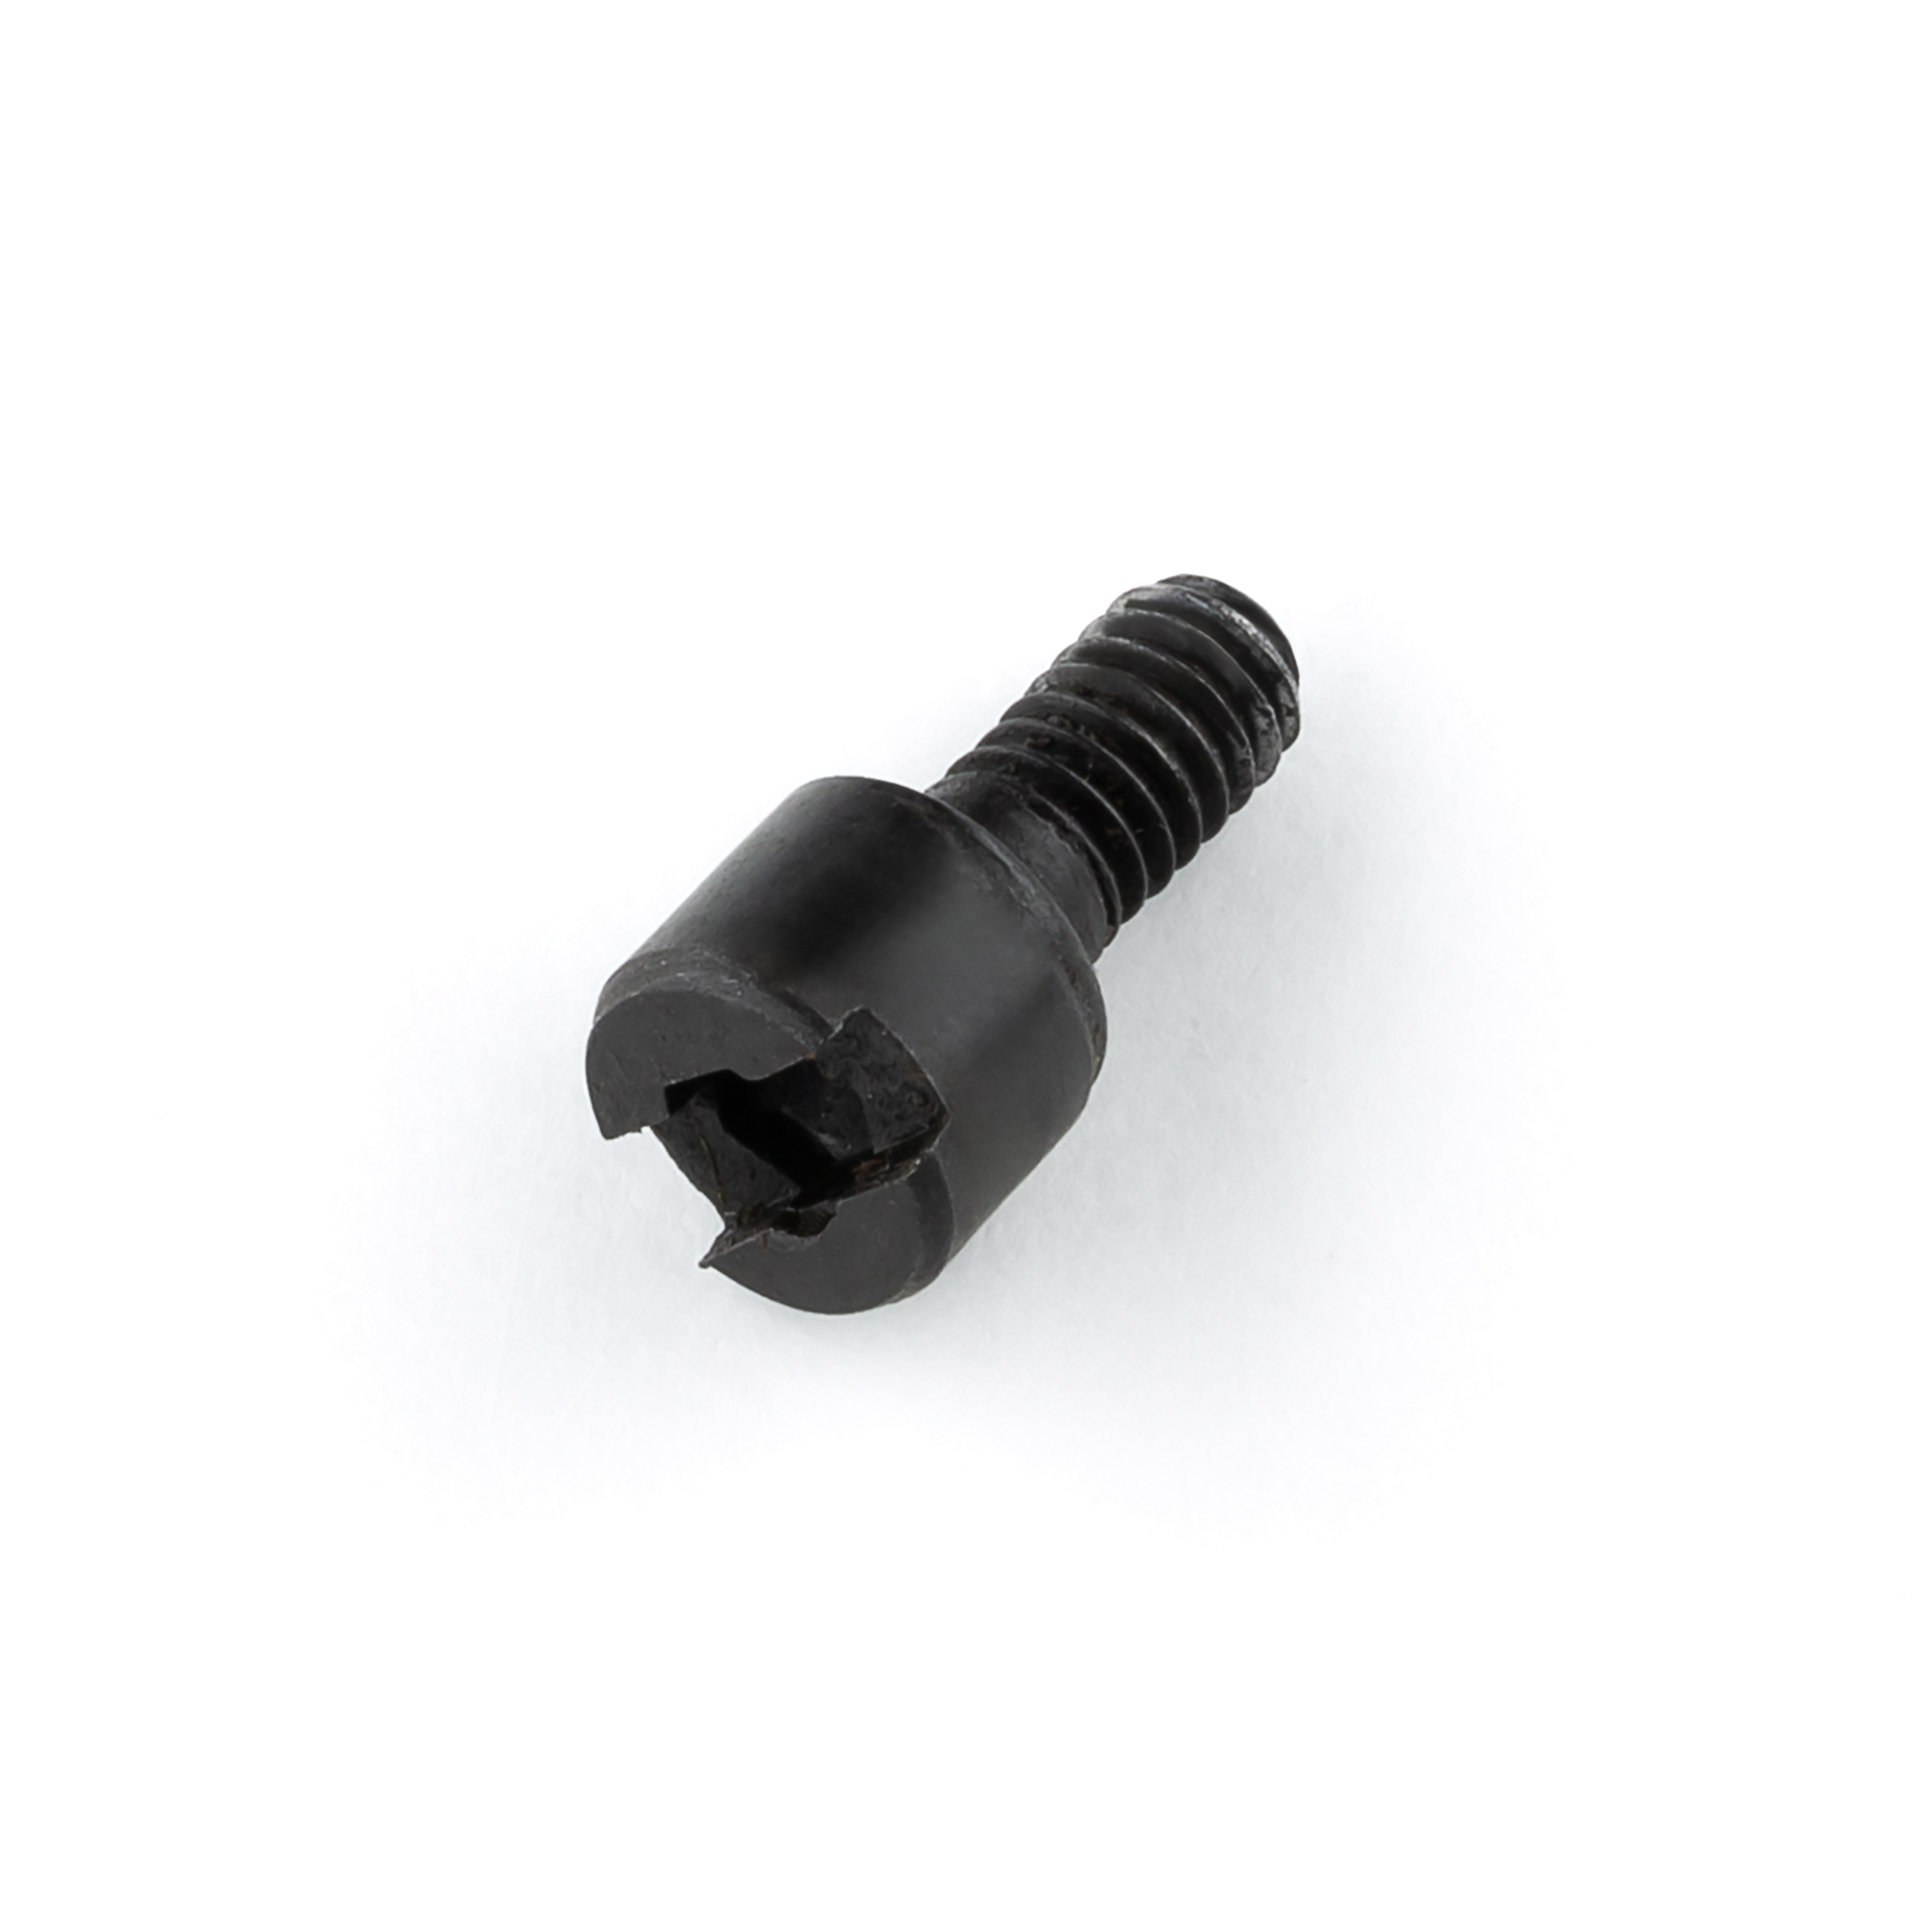 Kahler Spare Parts 8440 - Locknut Clamp Screw (Flat Style)